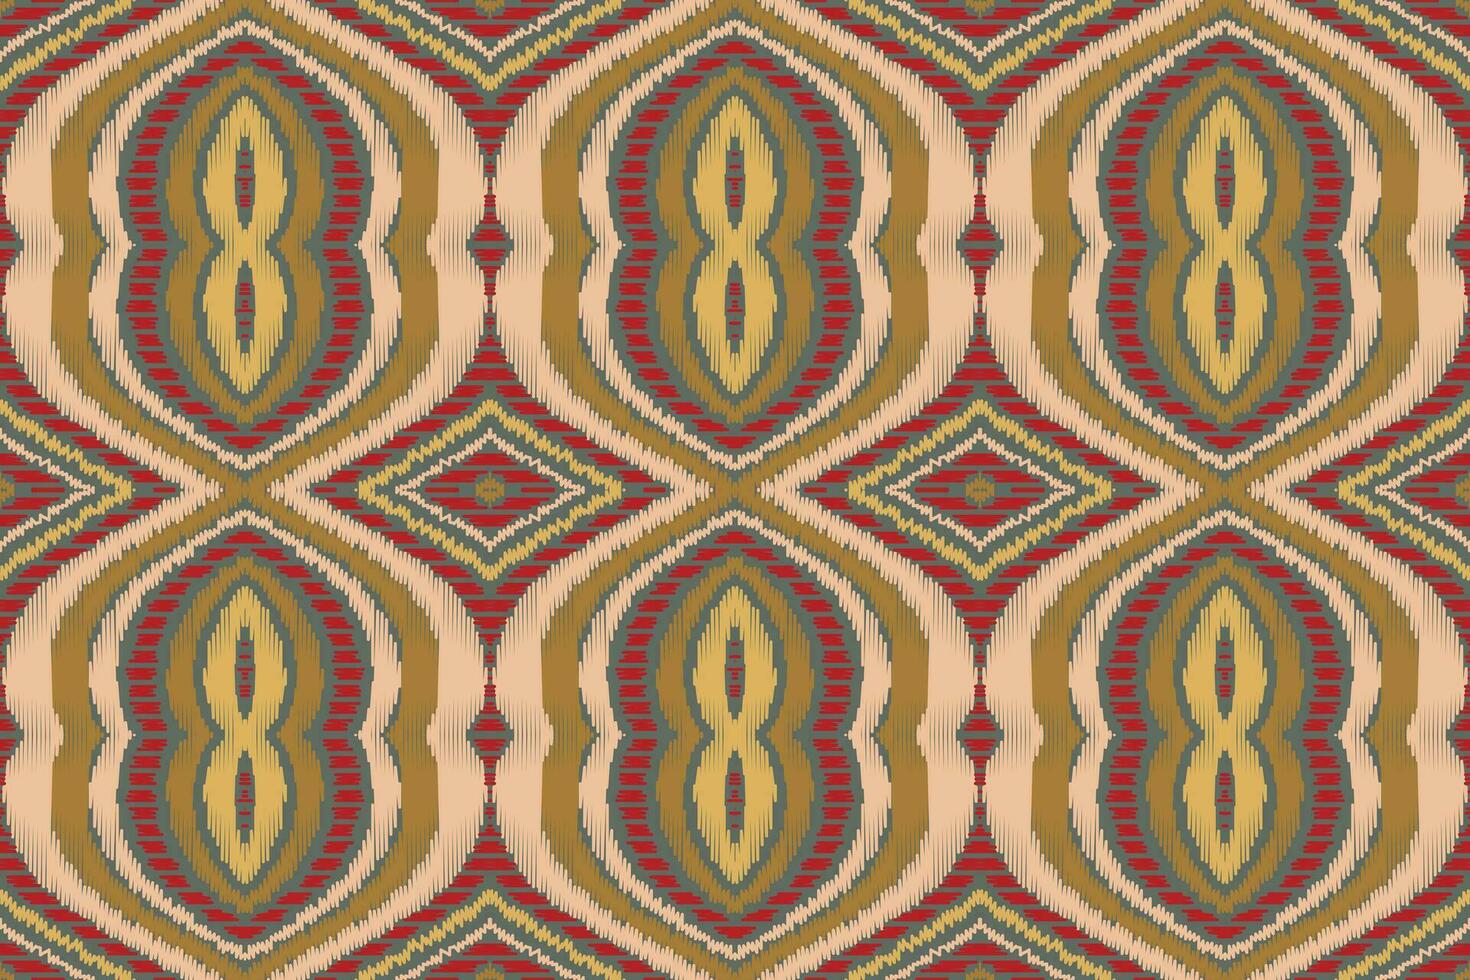 ikat damasco cachemir bordado antecedentes. ikat sin costura modelo geométrico étnico oriental modelo tradicional.azteca estilo resumen vector diseño para textura,tela,ropa,envoltura,pareo.